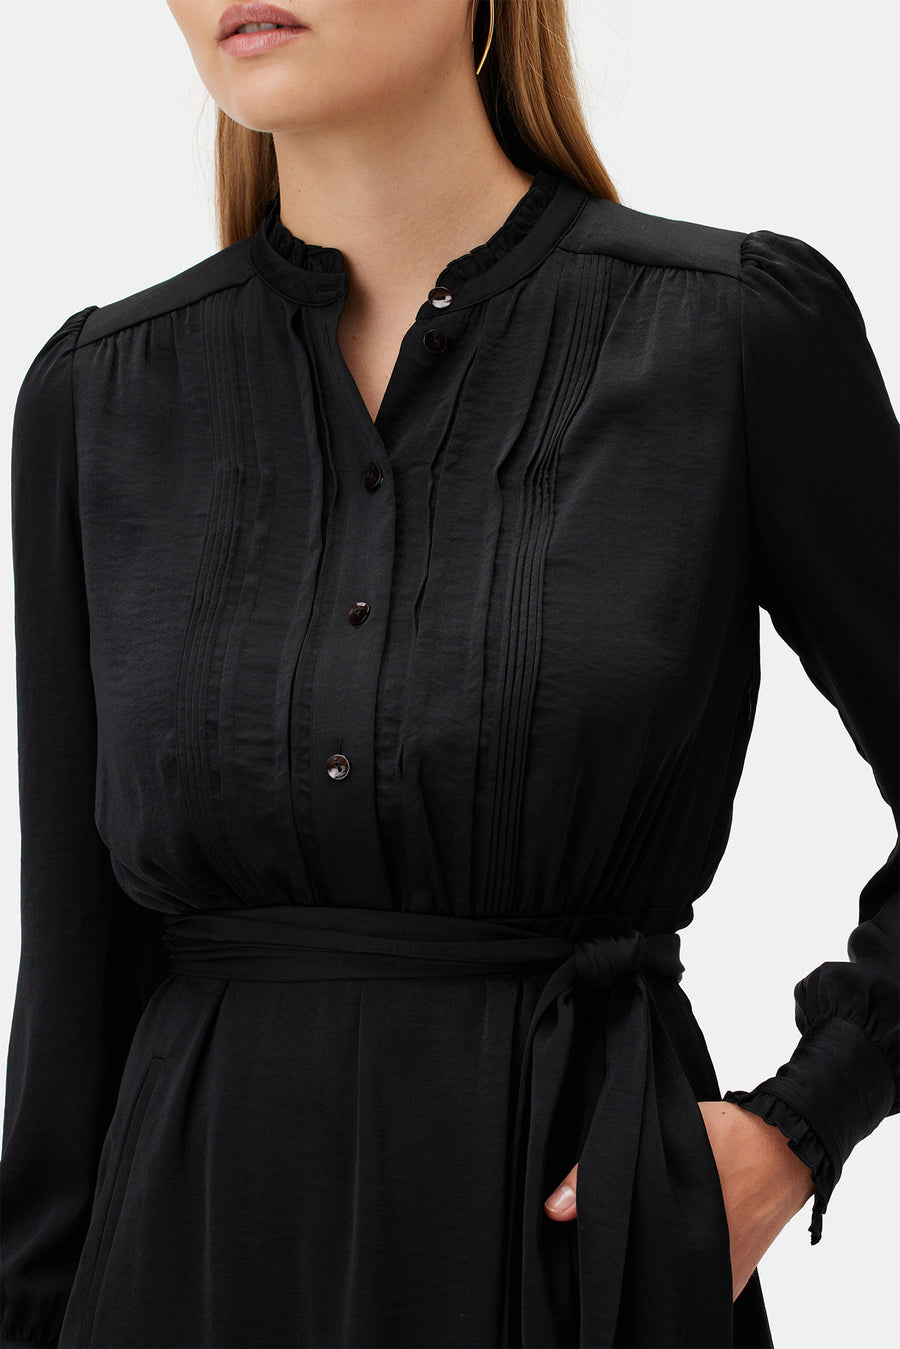 Malta Recycled Polyester Dress - Black